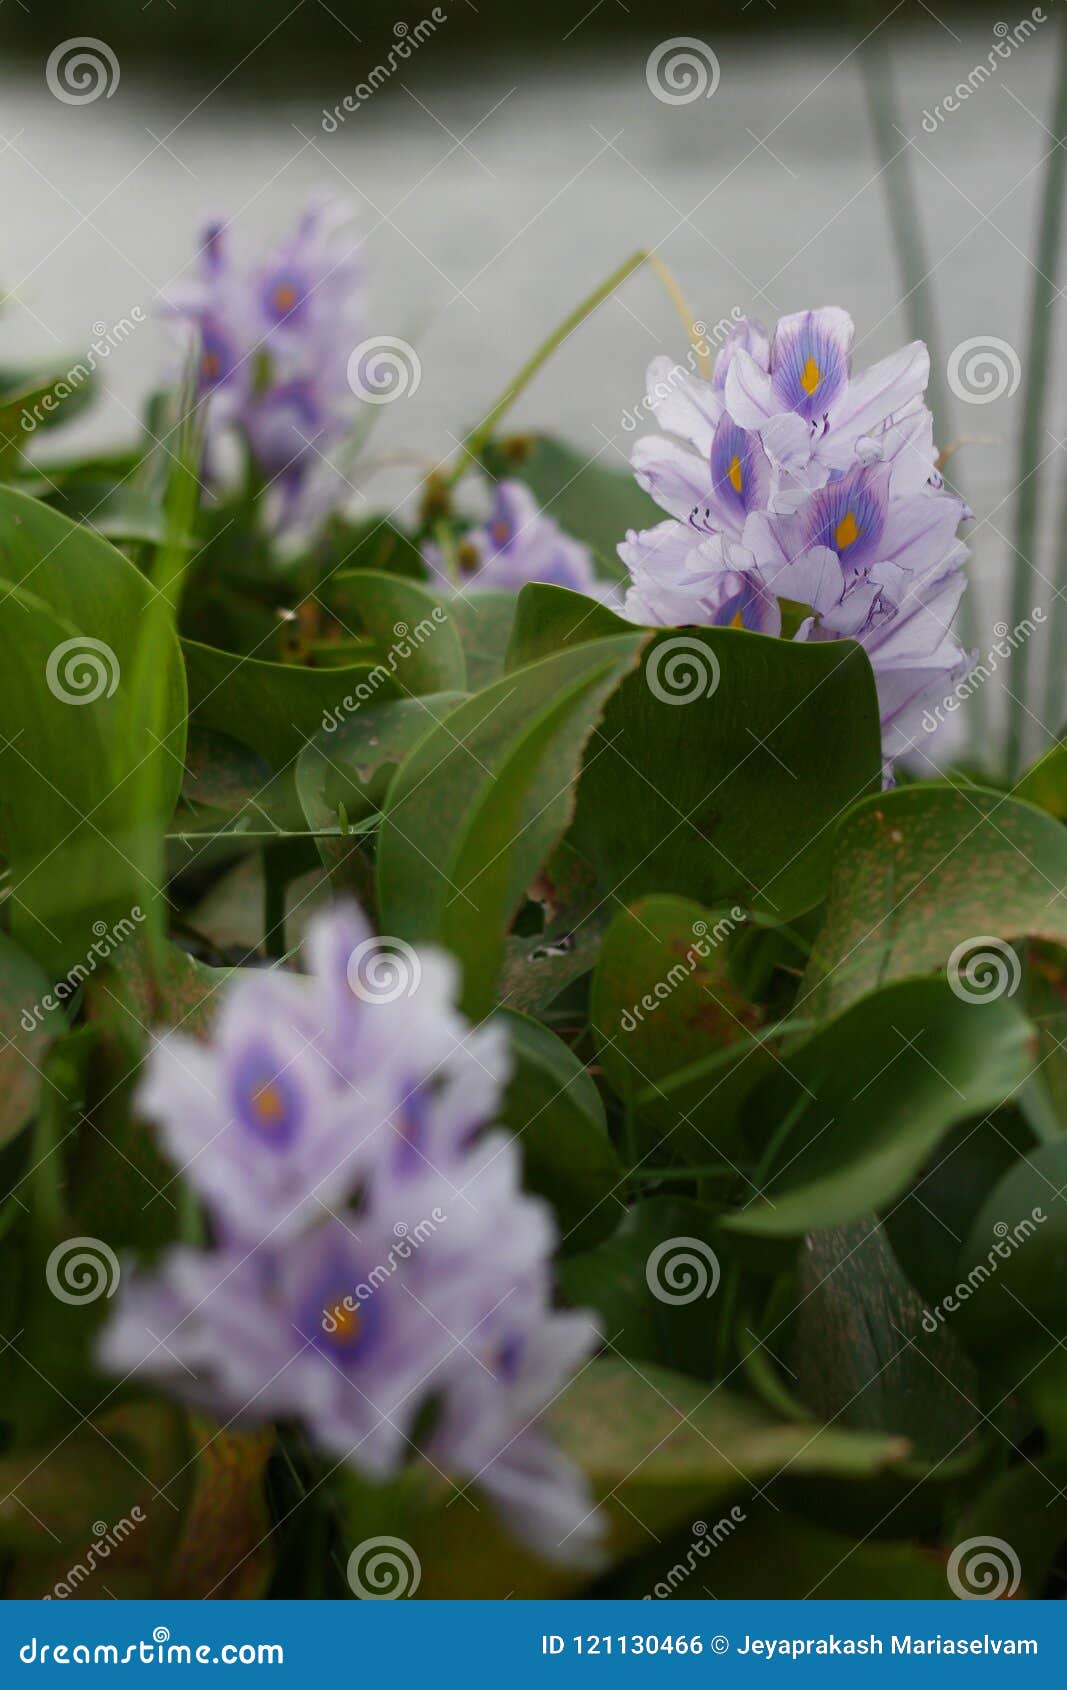 eichornia flower - common water hyacinth